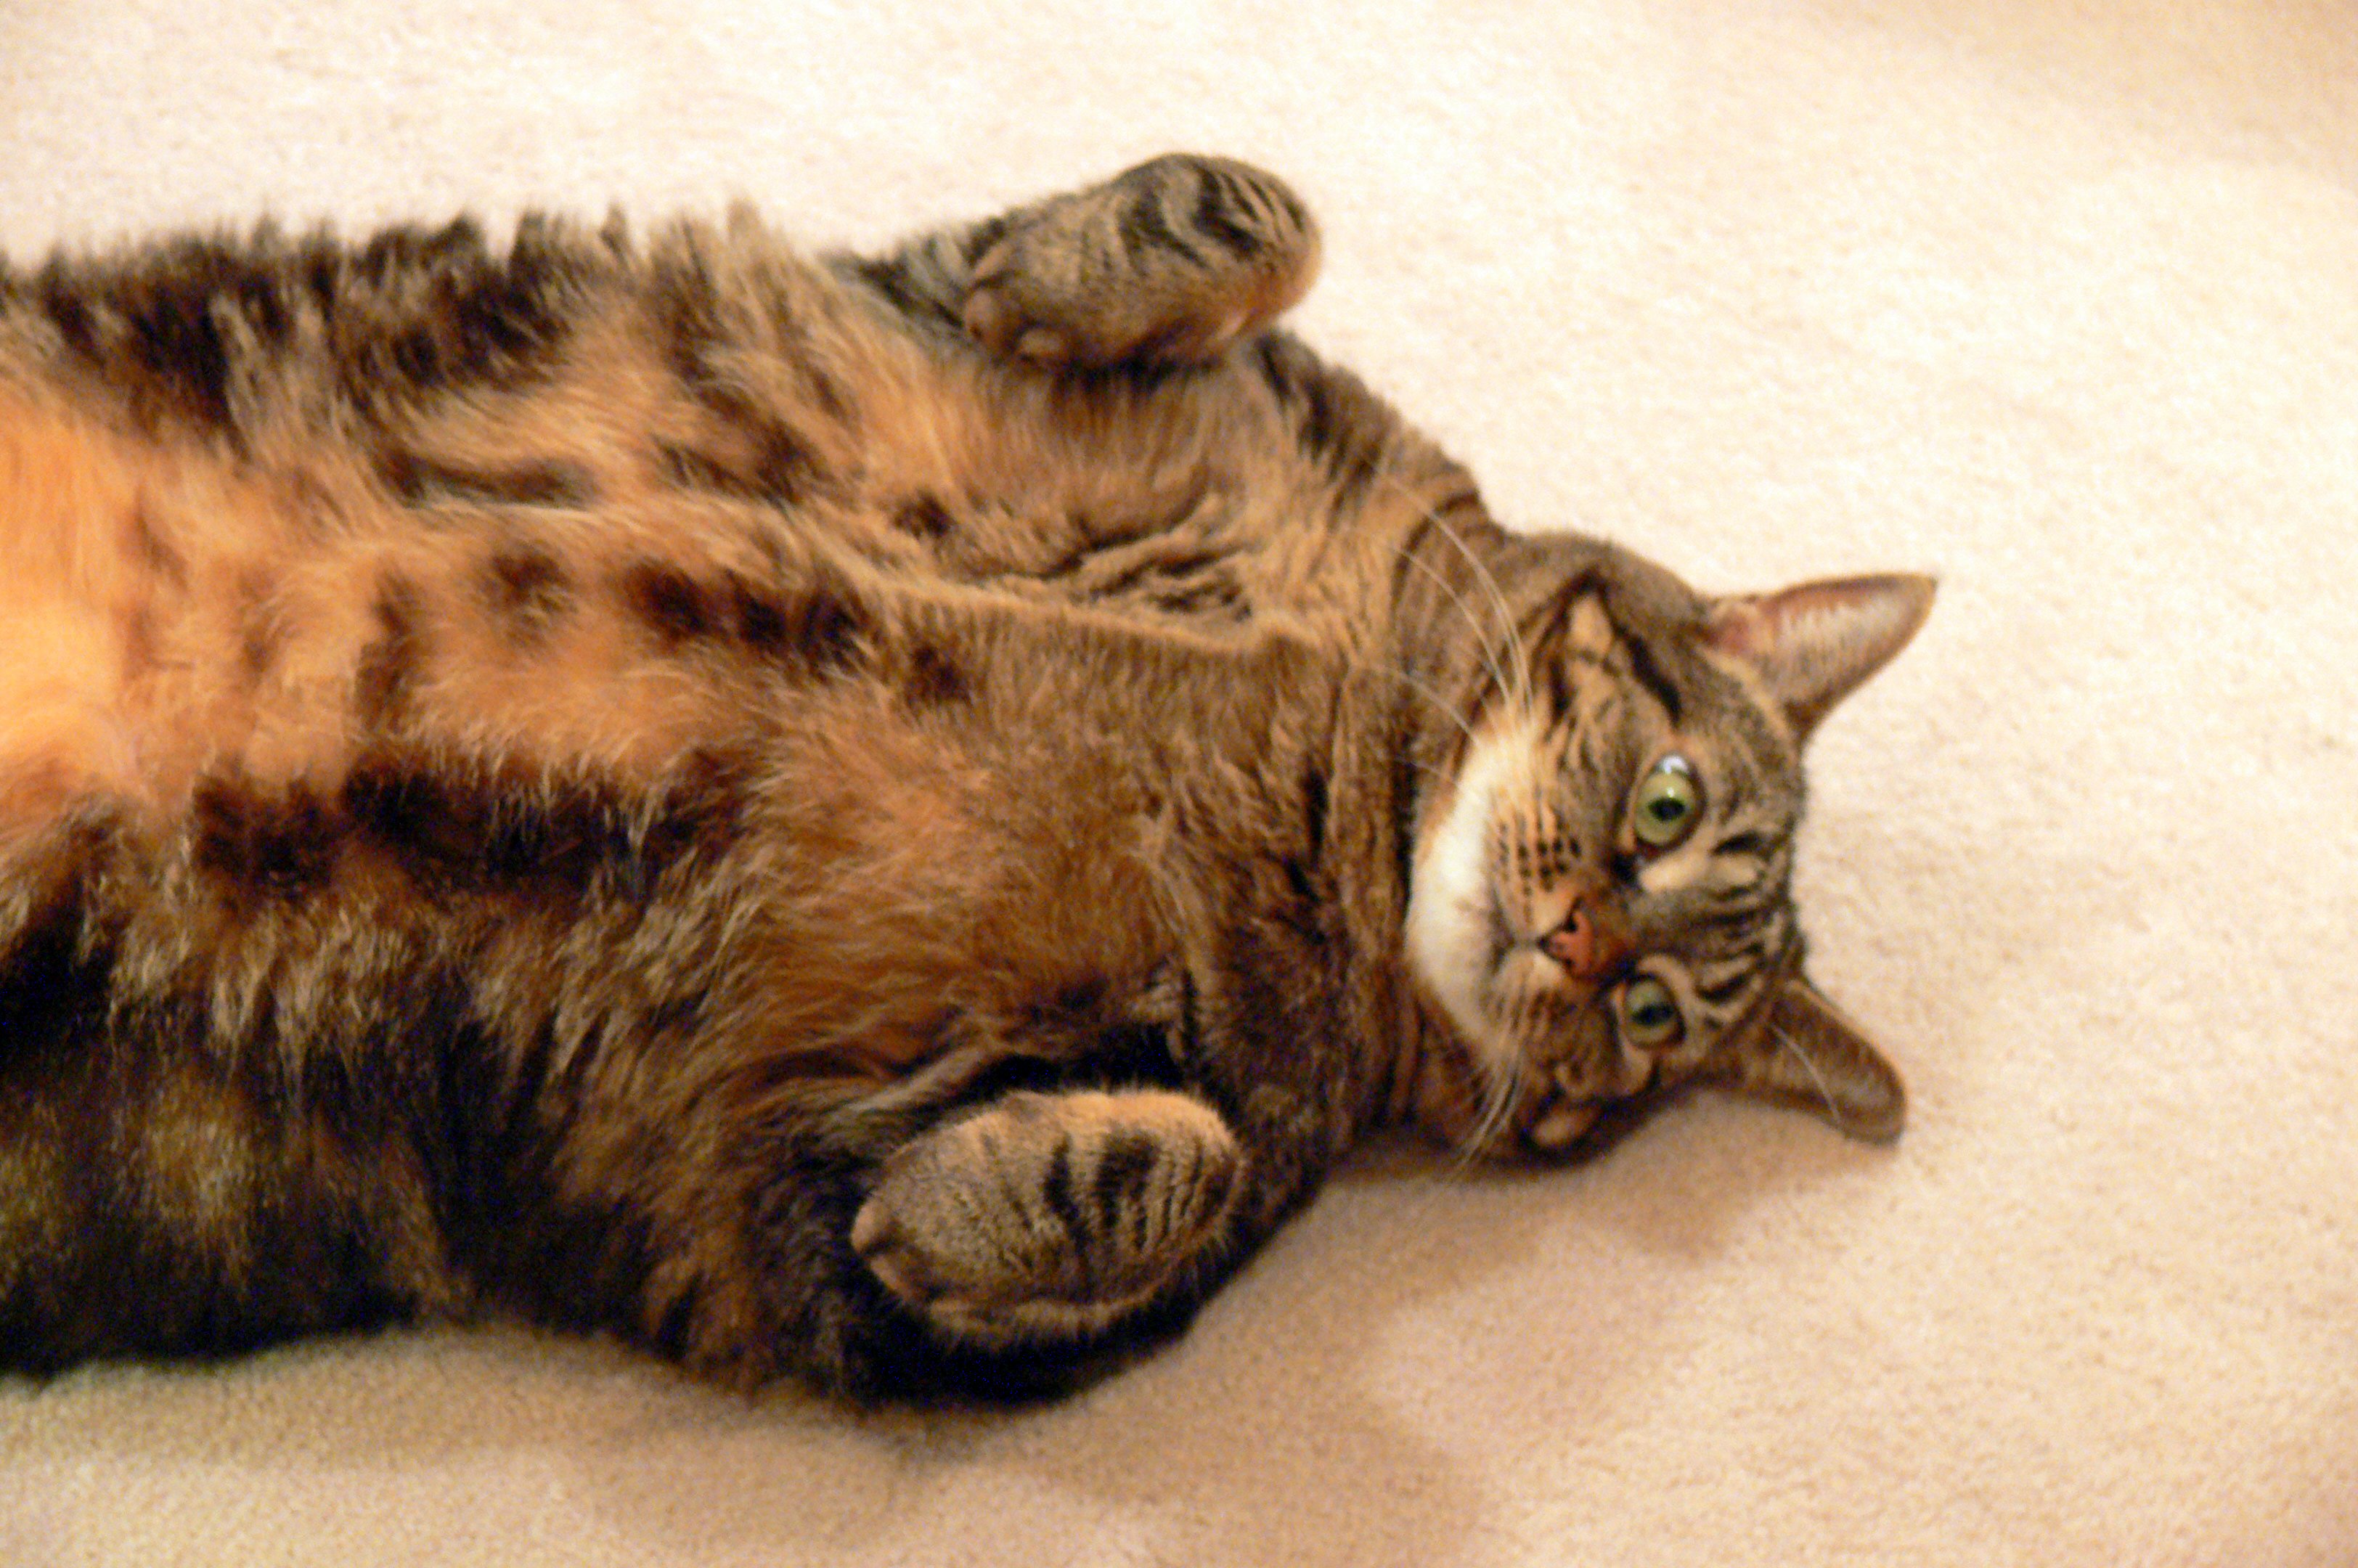 The Fat Cat poses.... again....